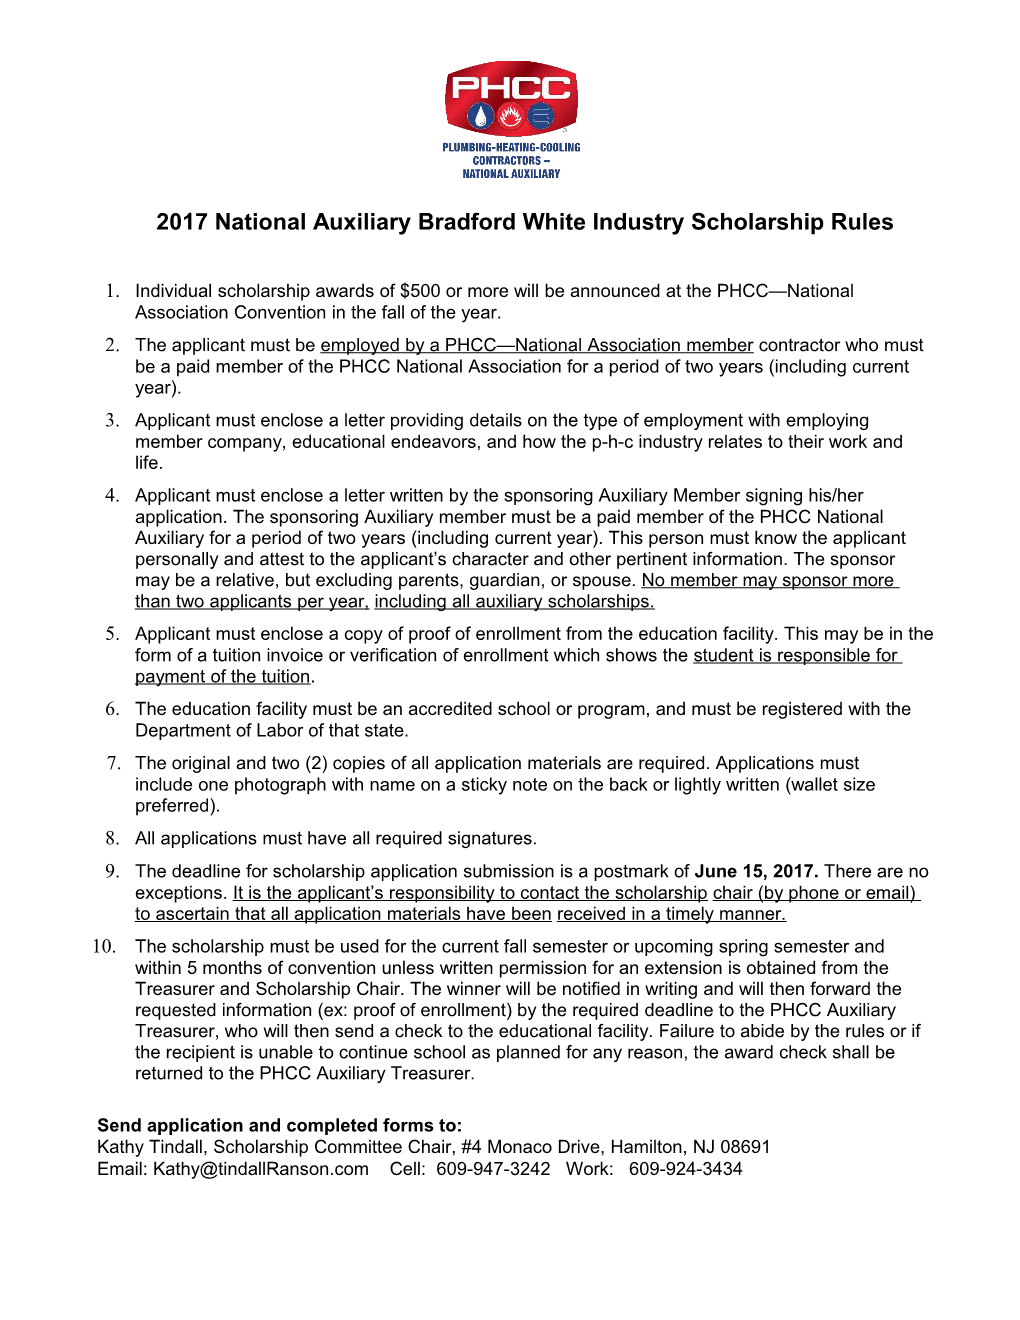 Bradford/White Industry Scholarship Rules